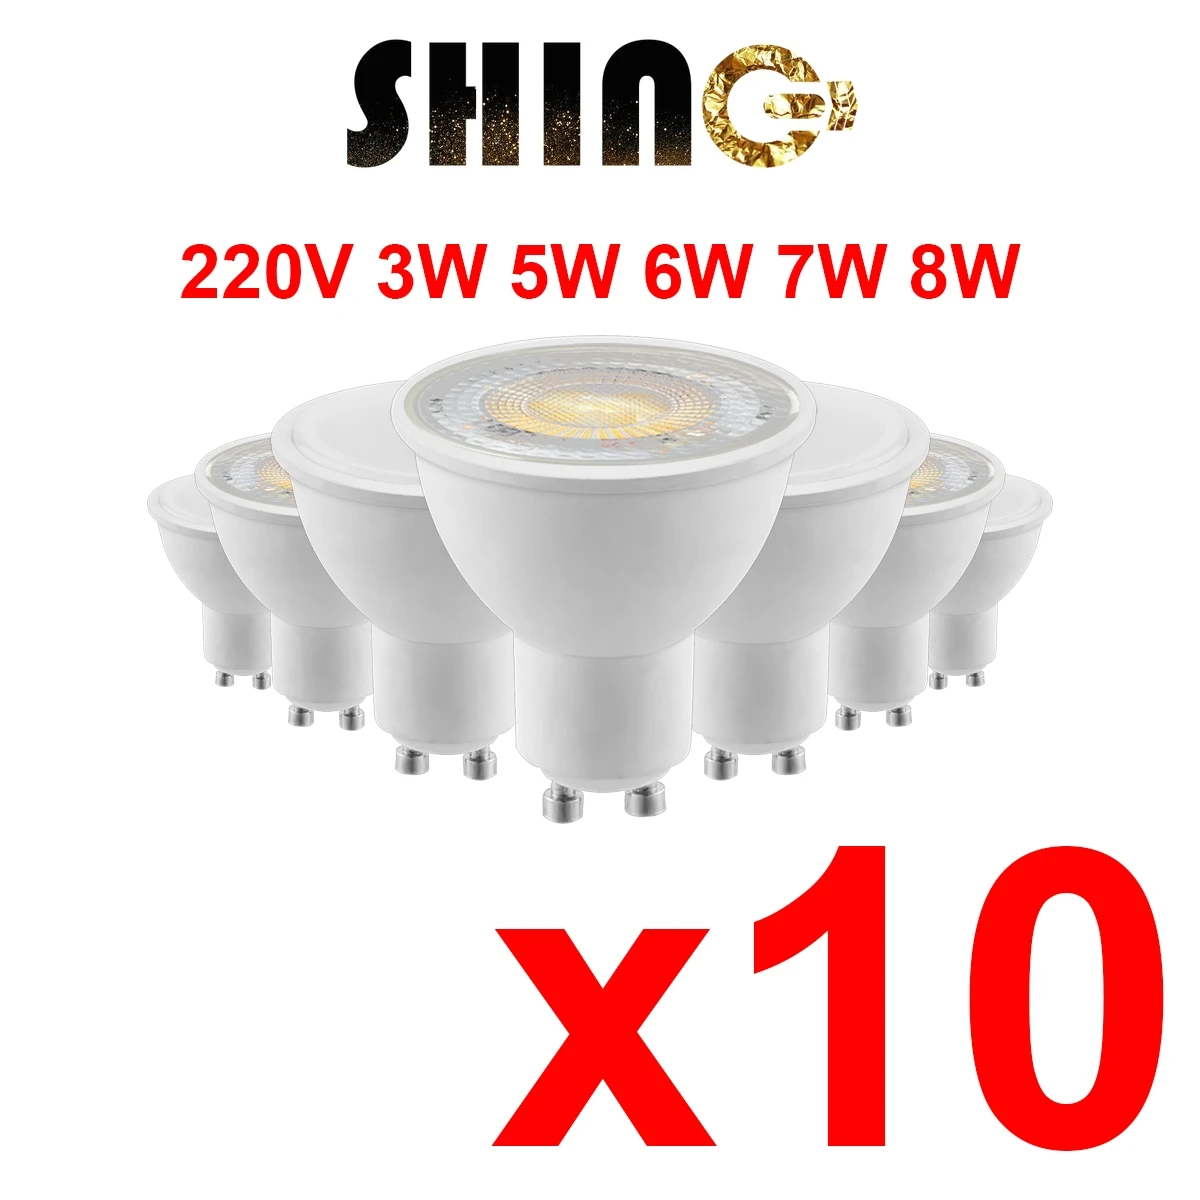 

10PCS LED Spotlight GU10 MR16 GU5.3 AC220V 3W-8W 38 120 degree high lumen warm white light replace 50W 100W halogen lamp